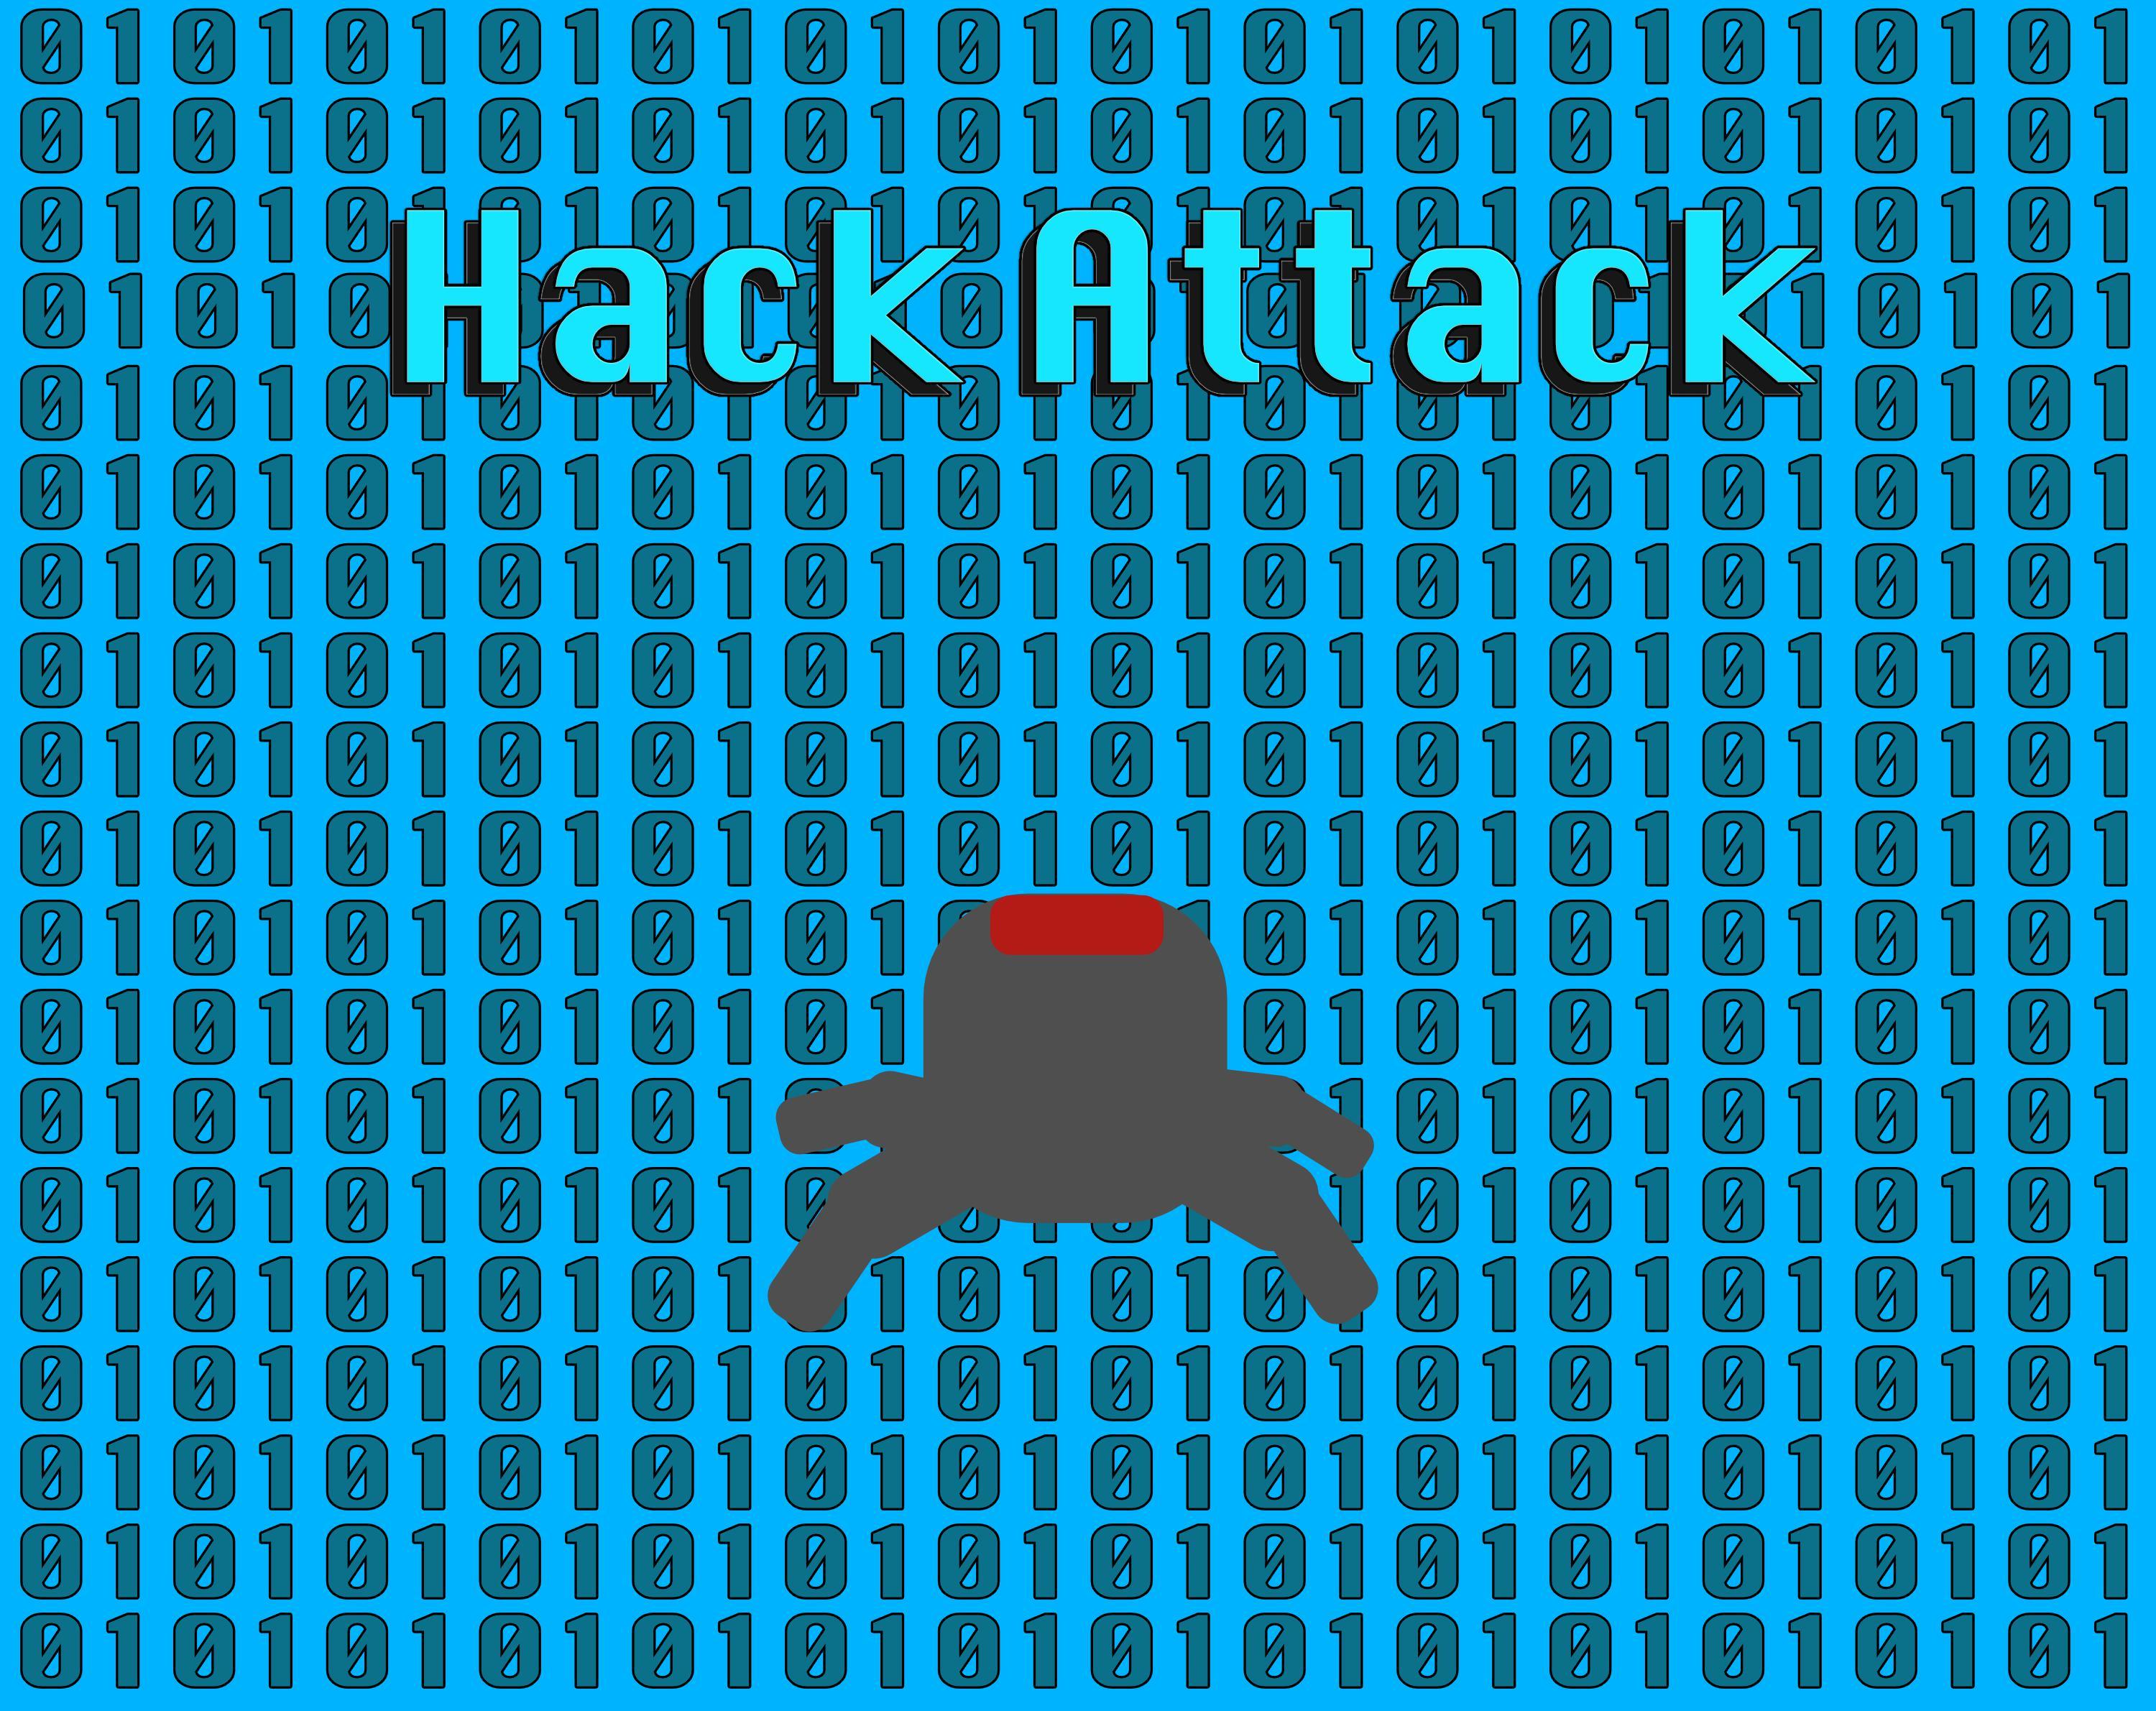 How Game Hacks Are Made - roblox jailbreak kite glitch